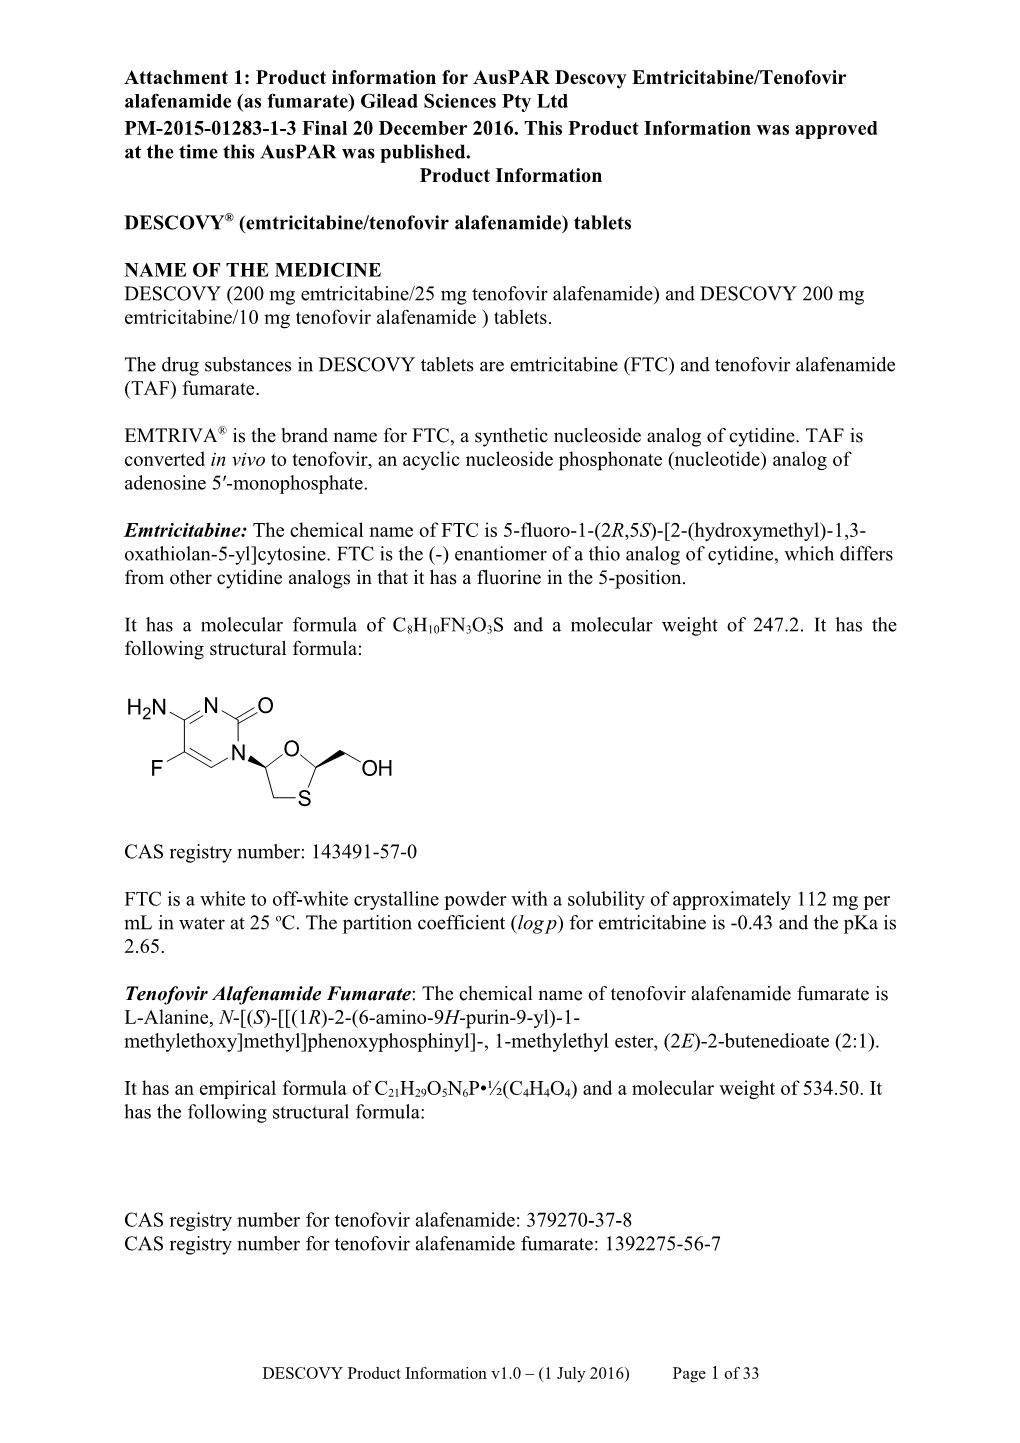 Australian Public Assessment Report for Emtricitabine/Tenofovir Alafenamide (As Fumarate)